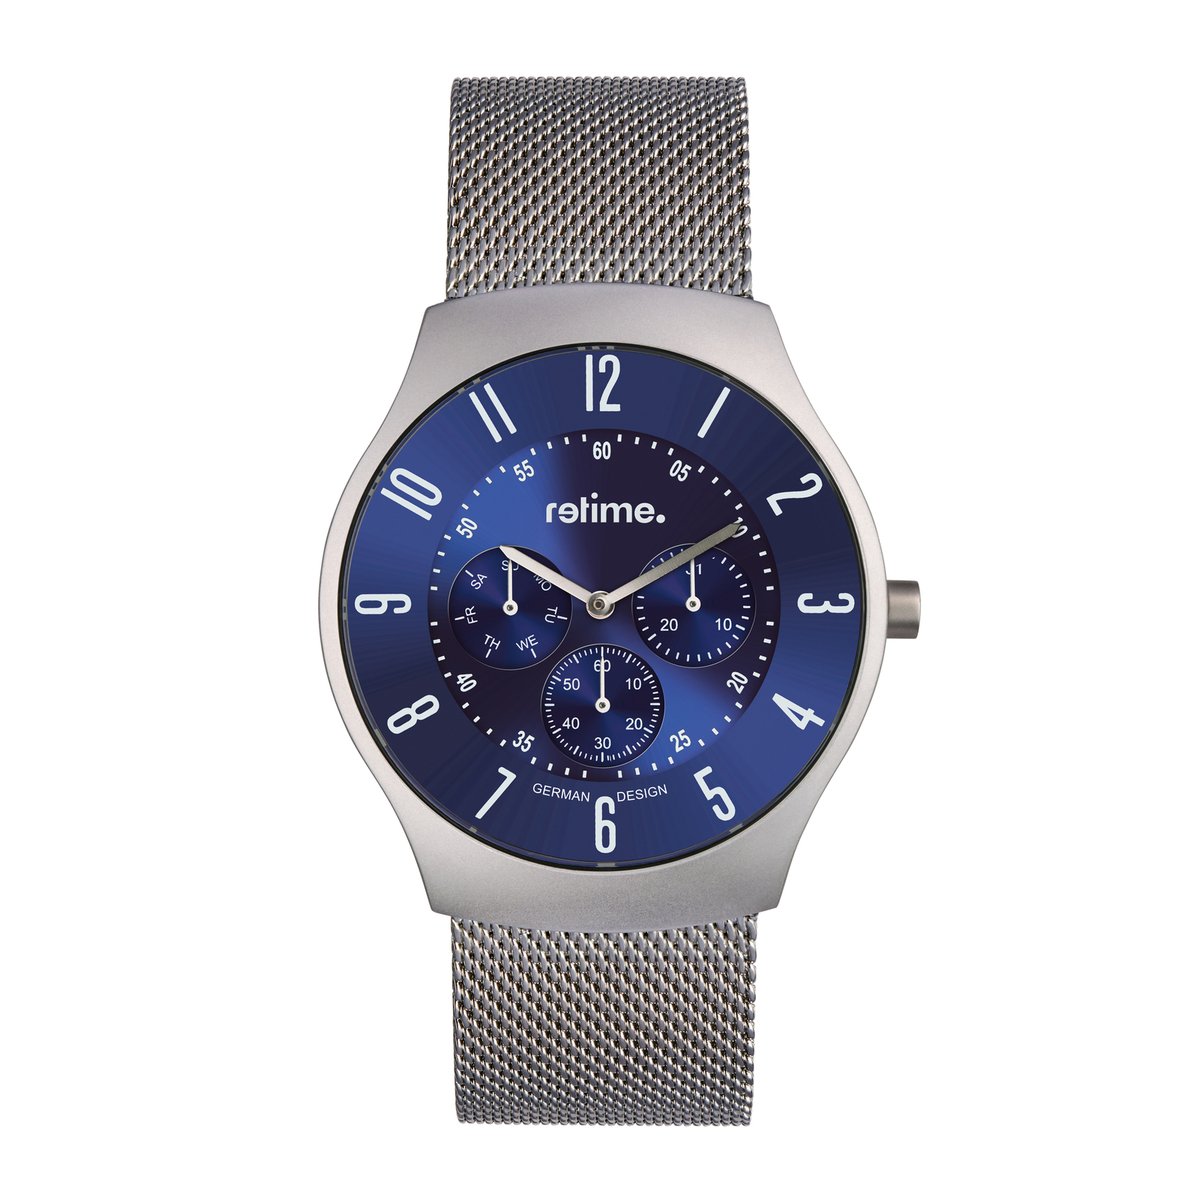 Armbanduhr RETIME-DESIGN 551-3 silber/blau 43mm